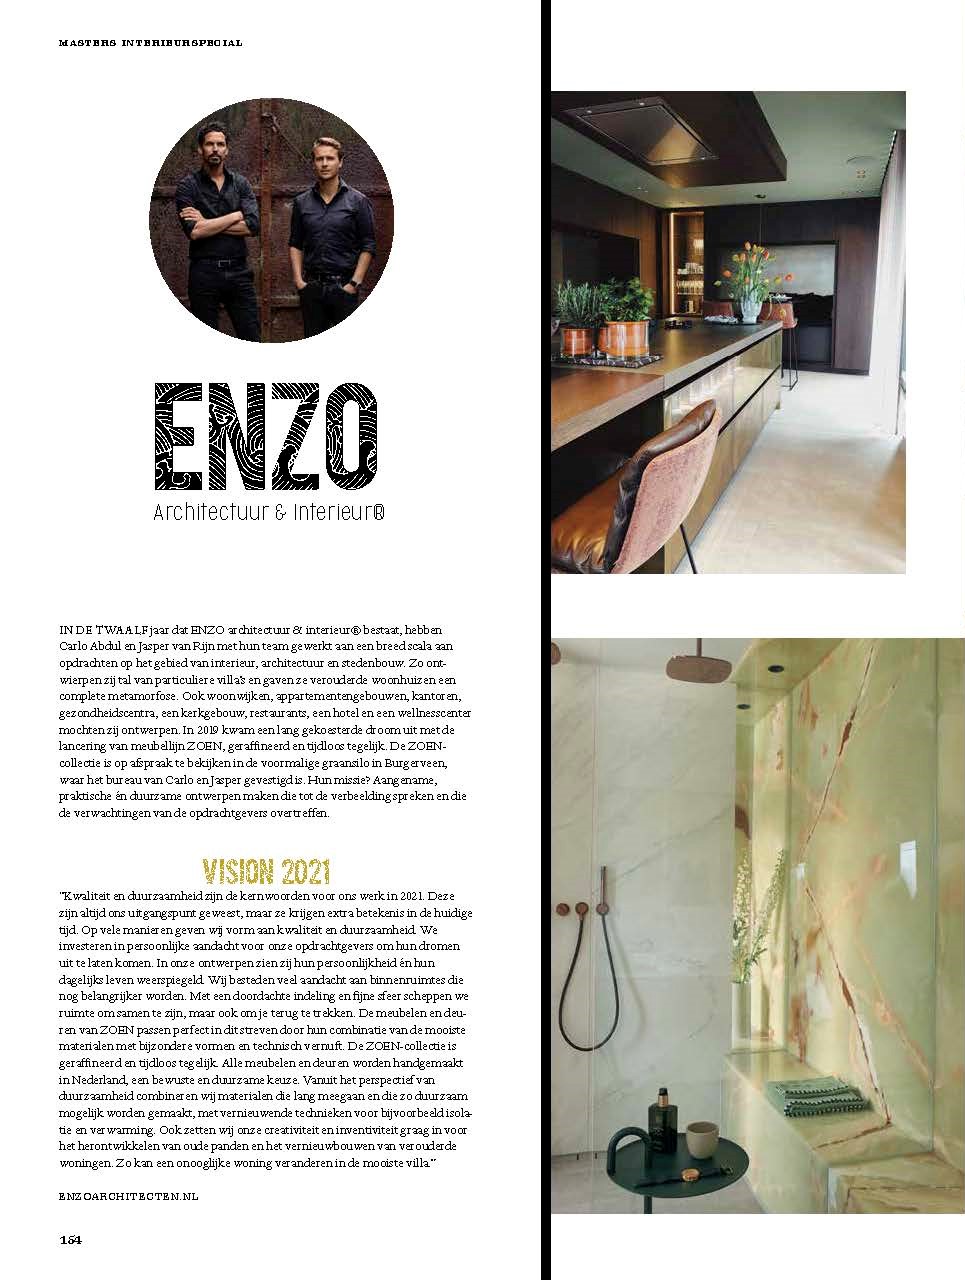 ENZO architectuur N interieur - Haarlemmermeer - Silo - Burgerveen - publicatie - MASTERS Company 300 - architectenspecial